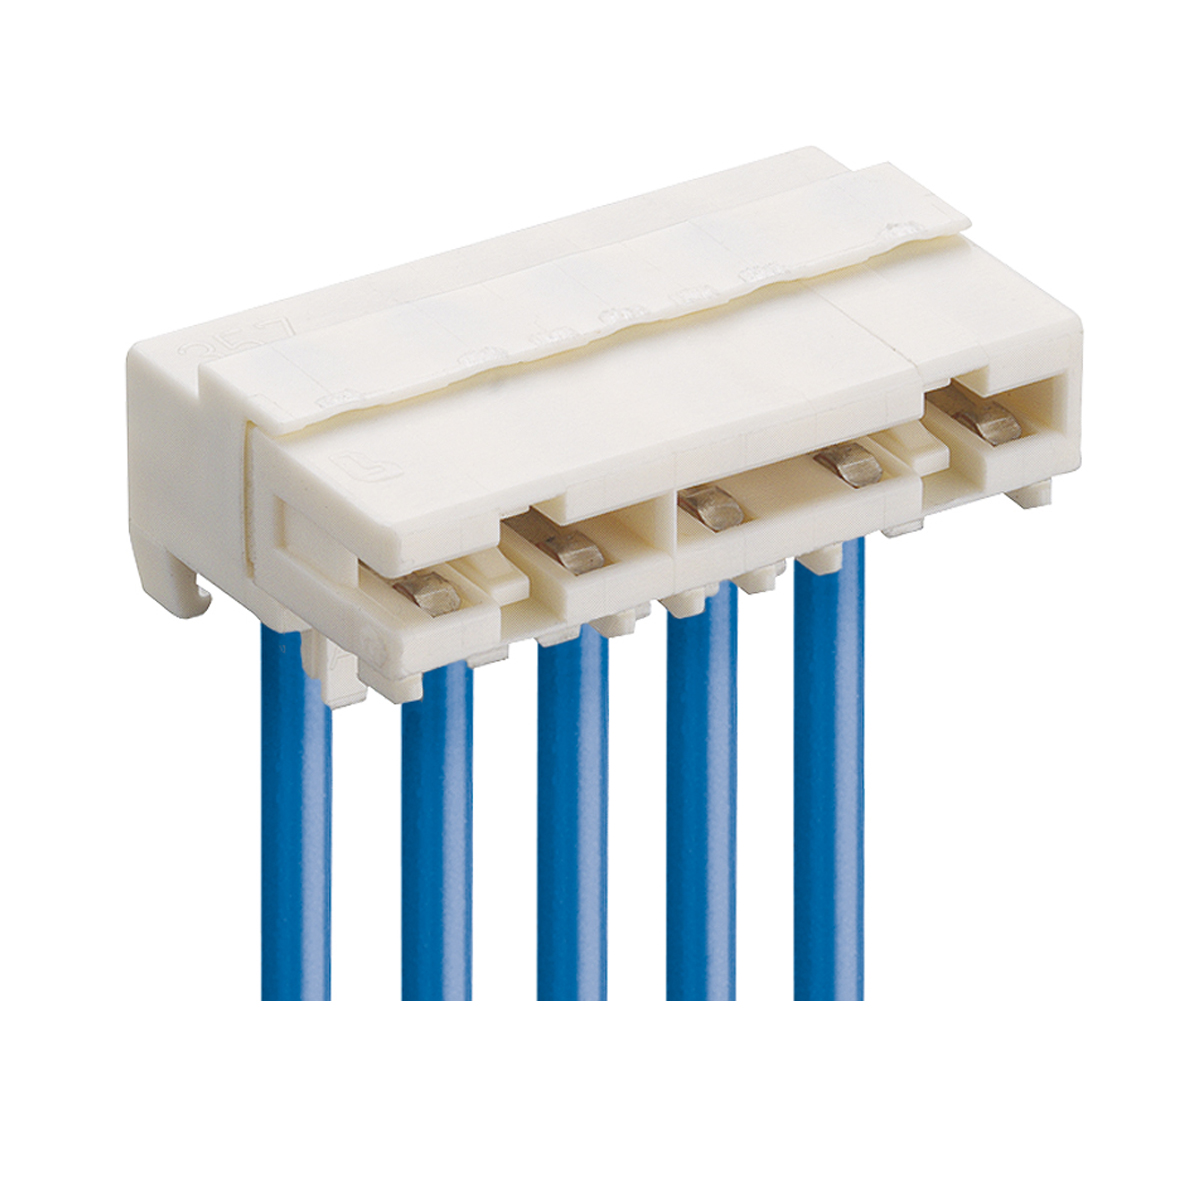 Lumberg: 3575 (Series 35 | RAST 2.5 connectors, pitch 2.5/5.0 mm)